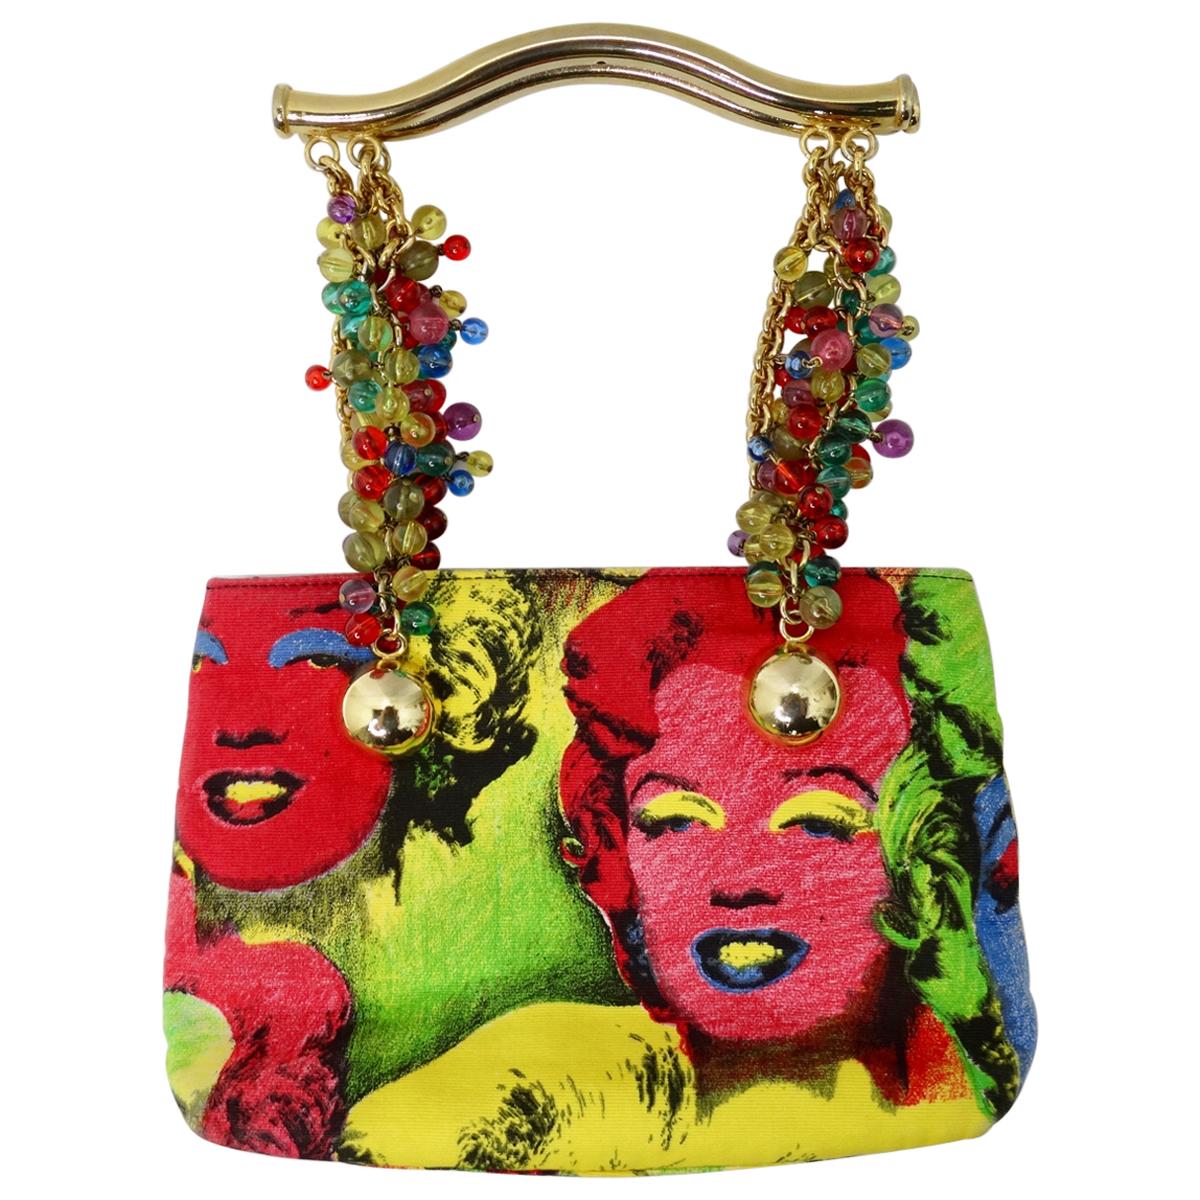 Marilyn Monroe Purse & Handbags - Marilyn Monroe Bags